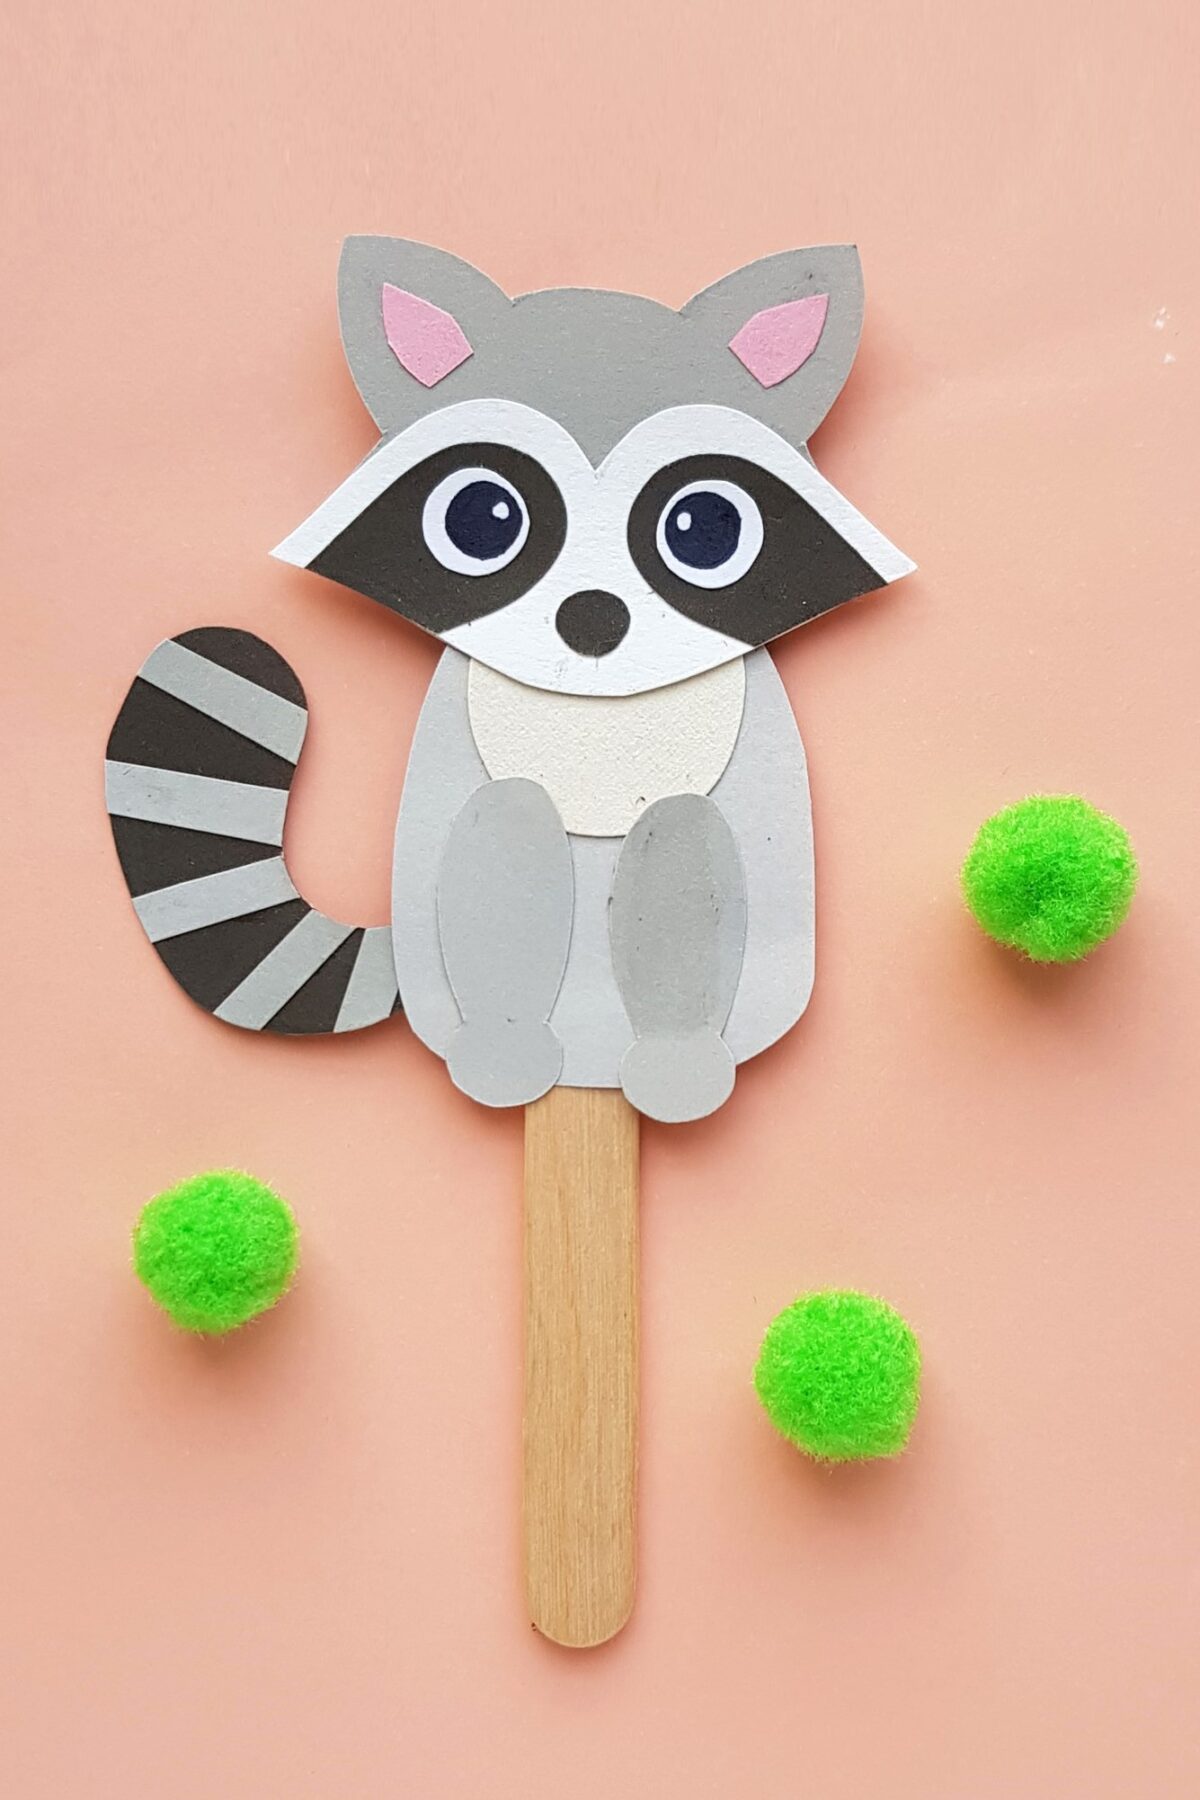 Papercraft Raccoon Puppet - Animal Kids Craft - Frugal Mom Eh!